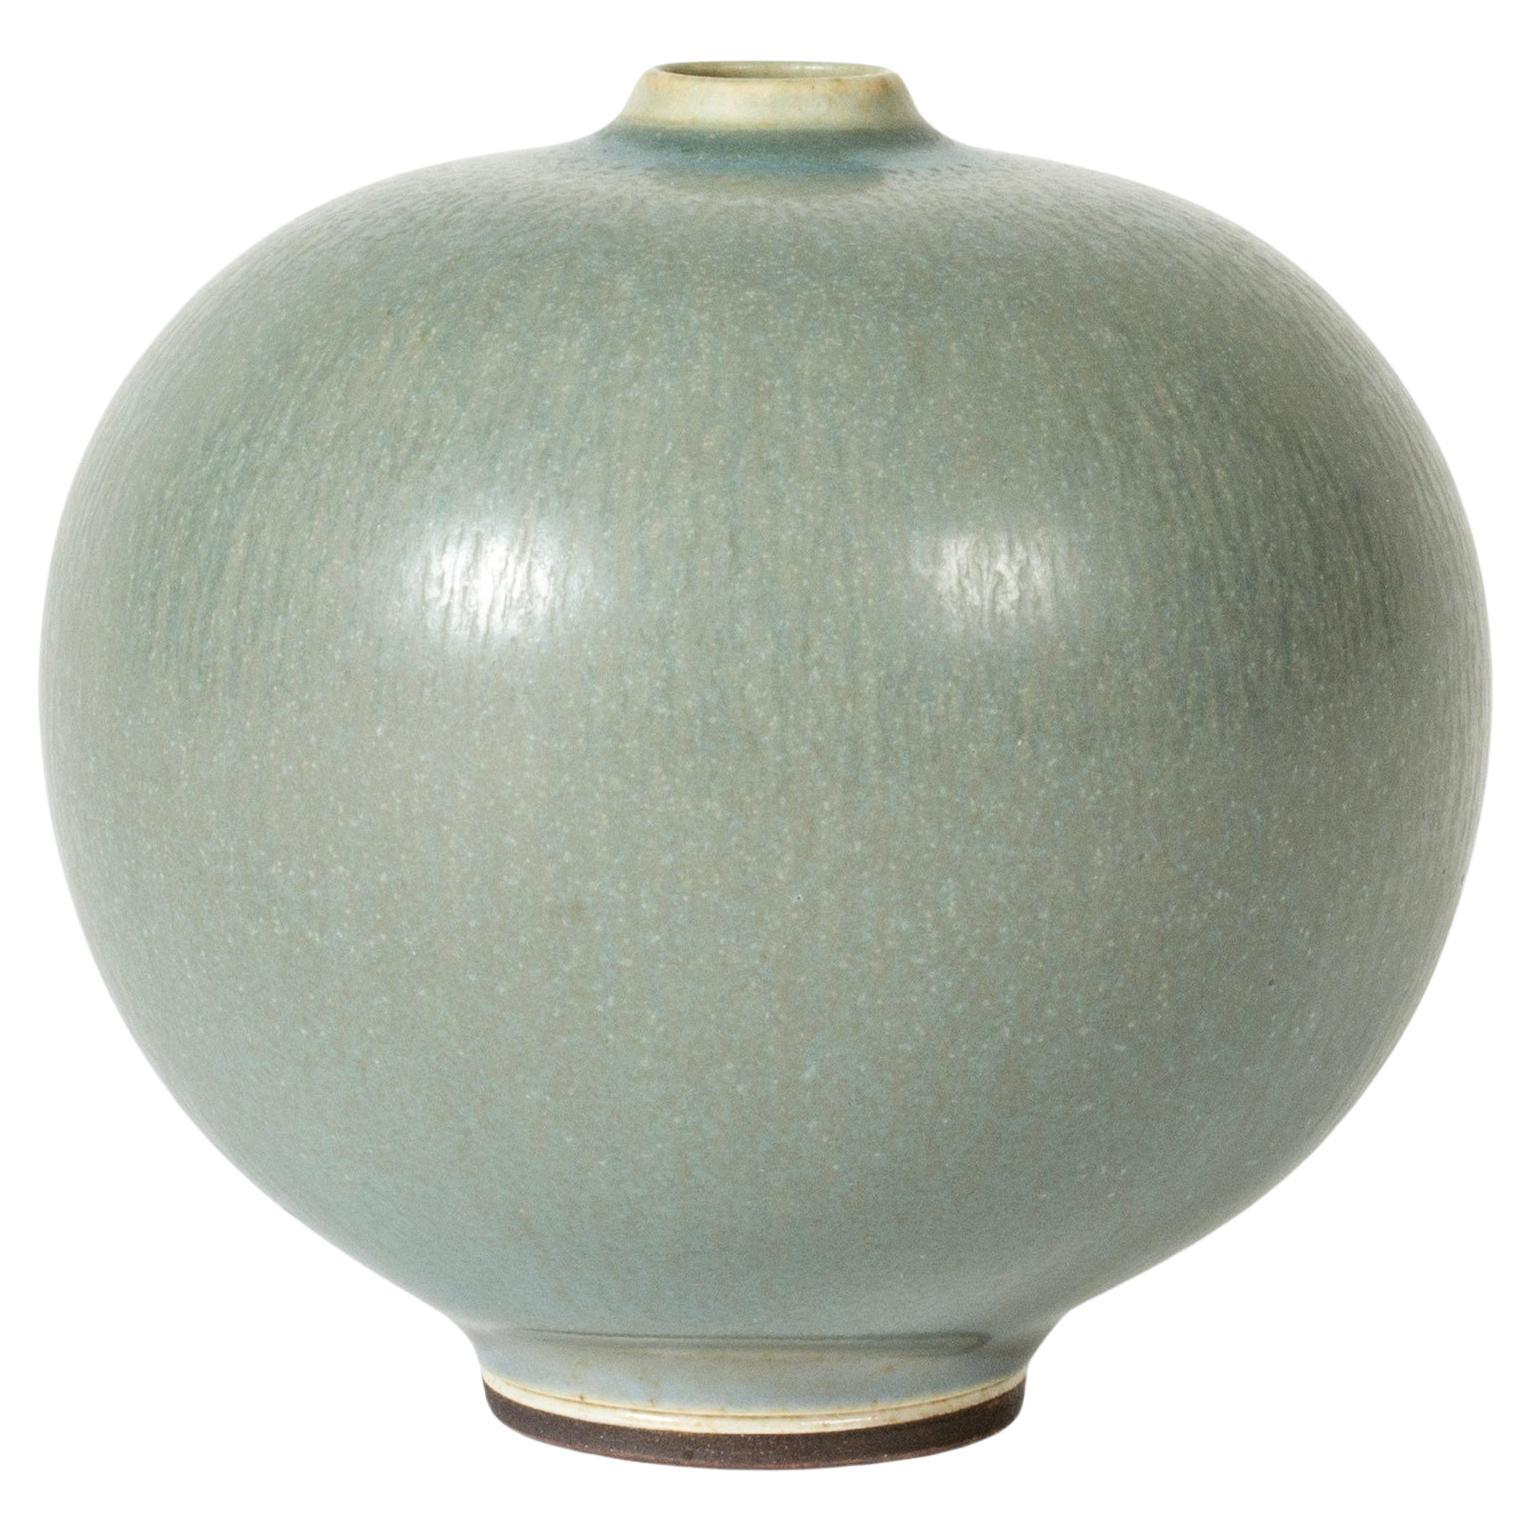 Midcentury Stoneware Vase by Berndt Friberg, Gustavsberg, Sweden, 1950s